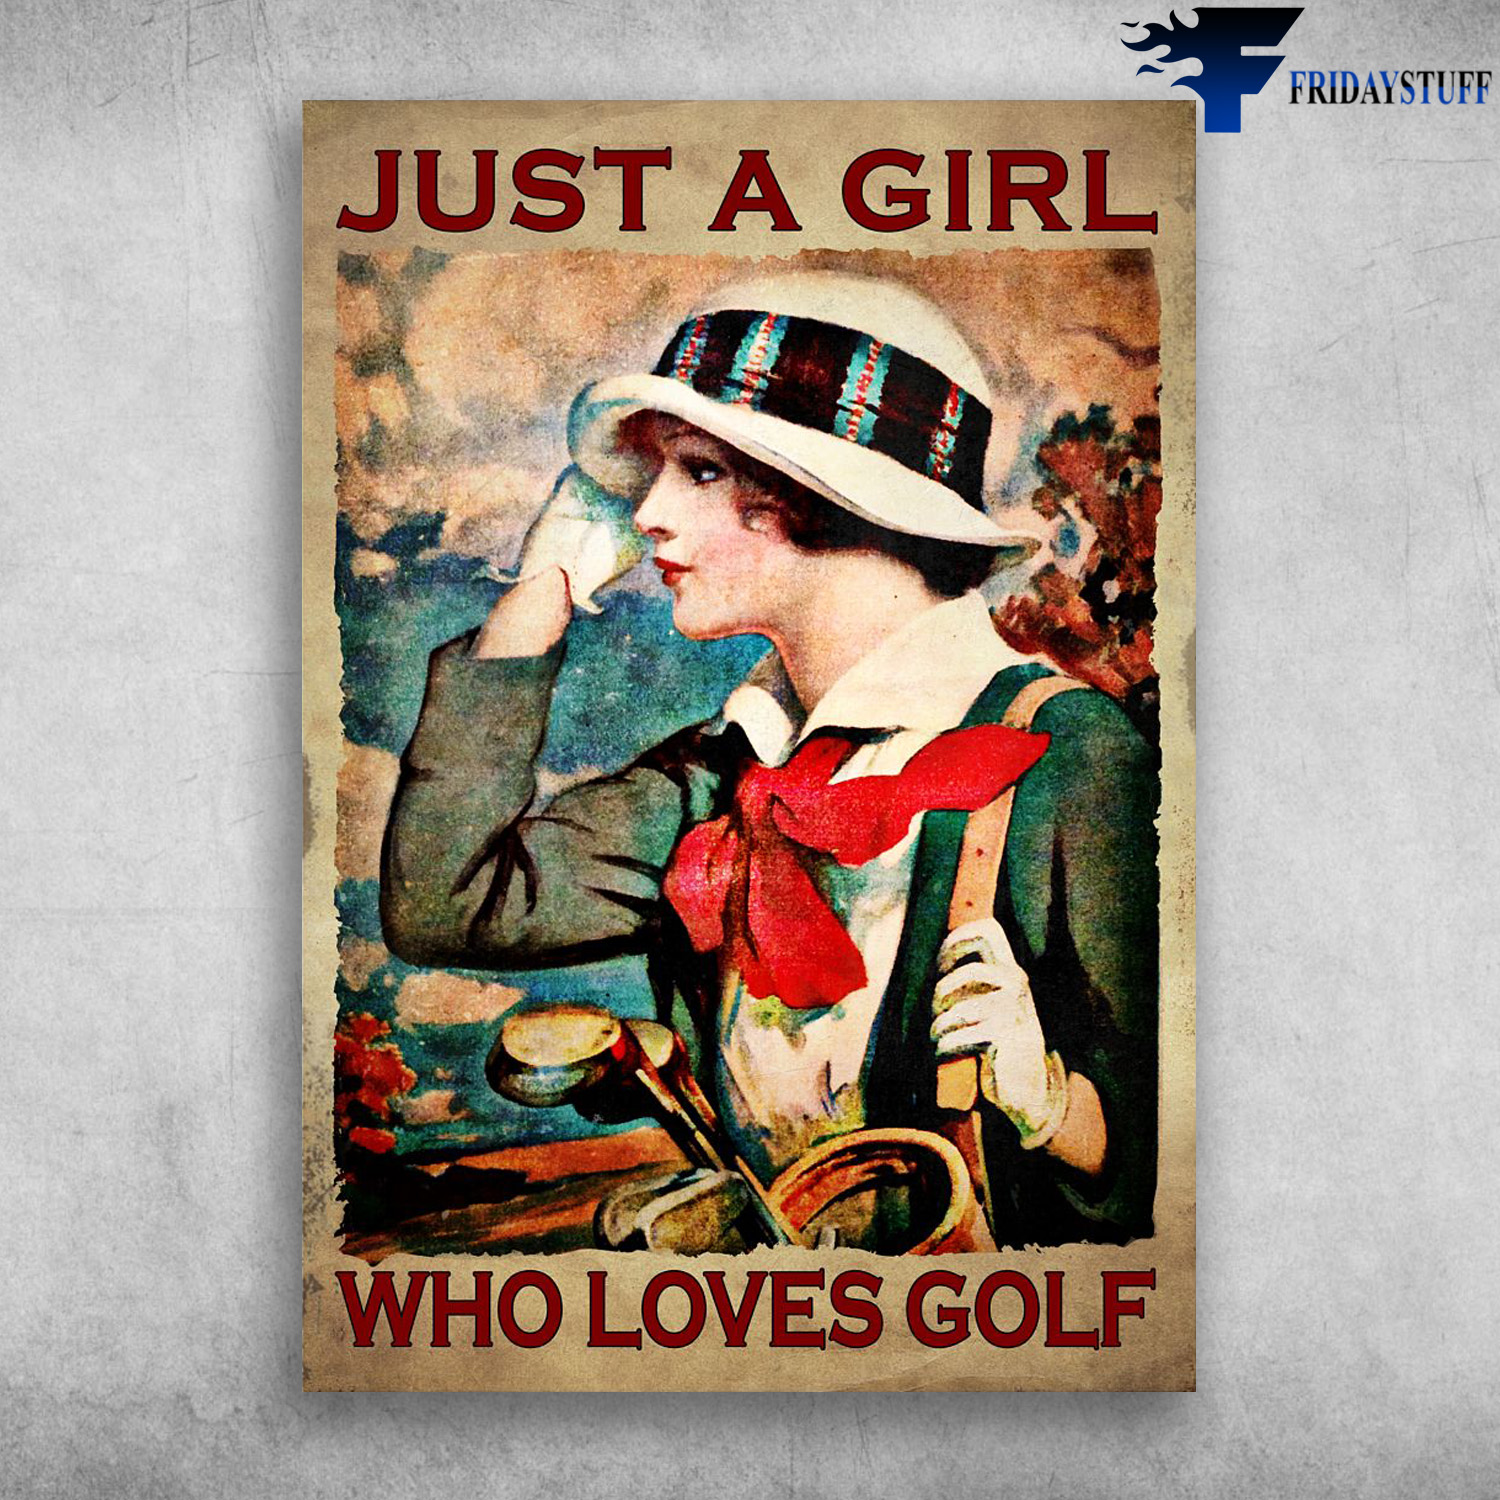 Lady Plays Golf - Lisy A Girl, Who Loves Golf